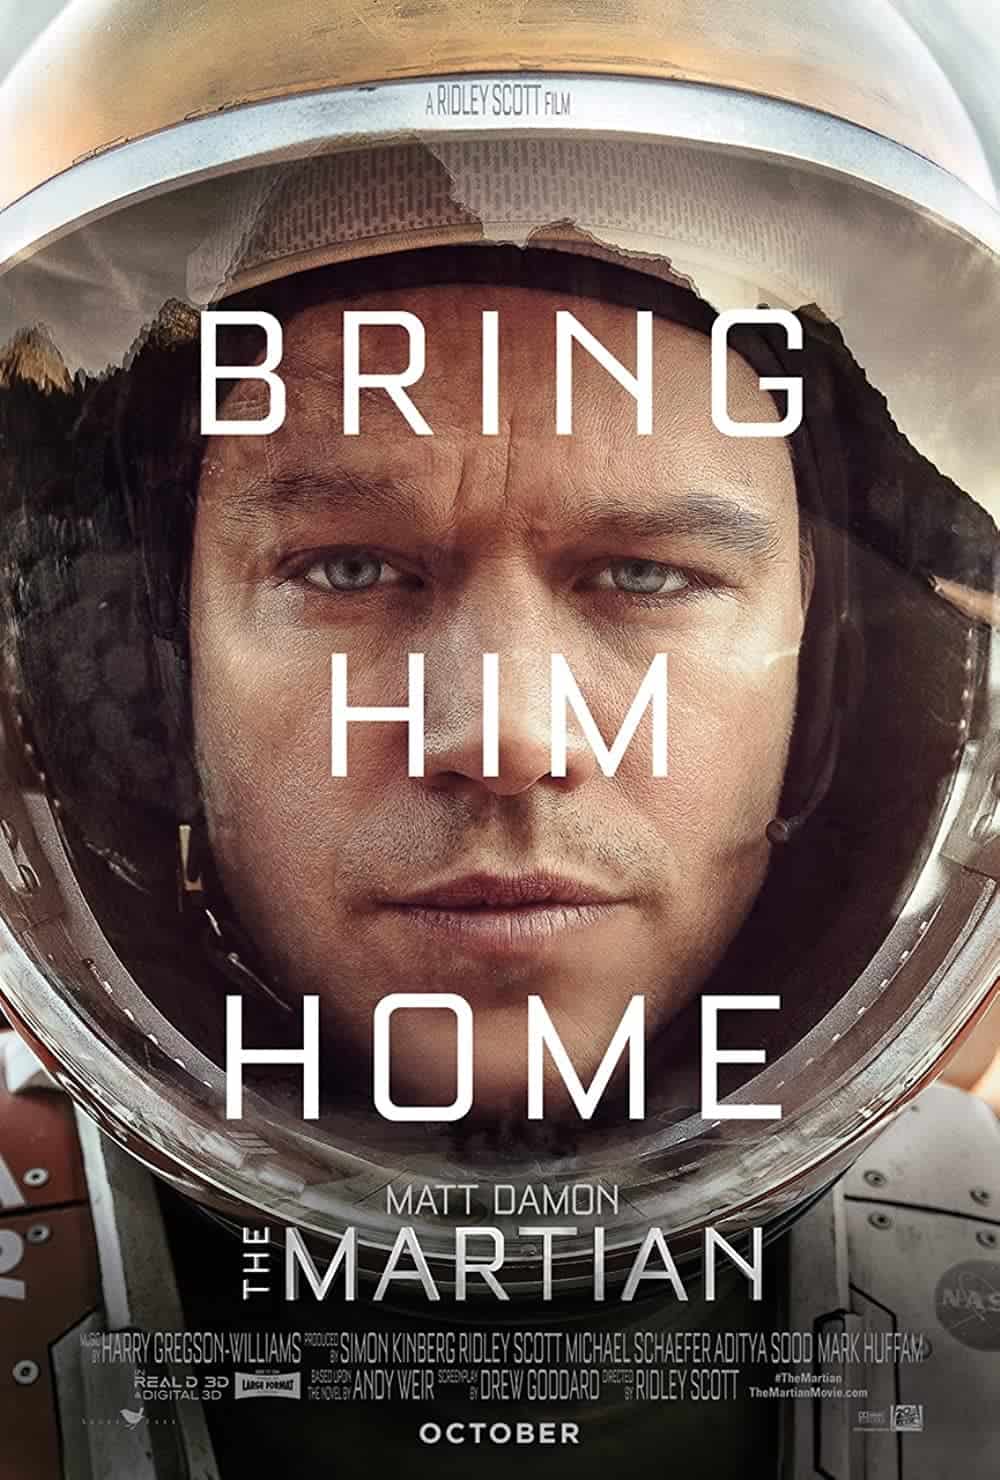 The Martian (2015) Best Matt Damon Movies (Ranked)